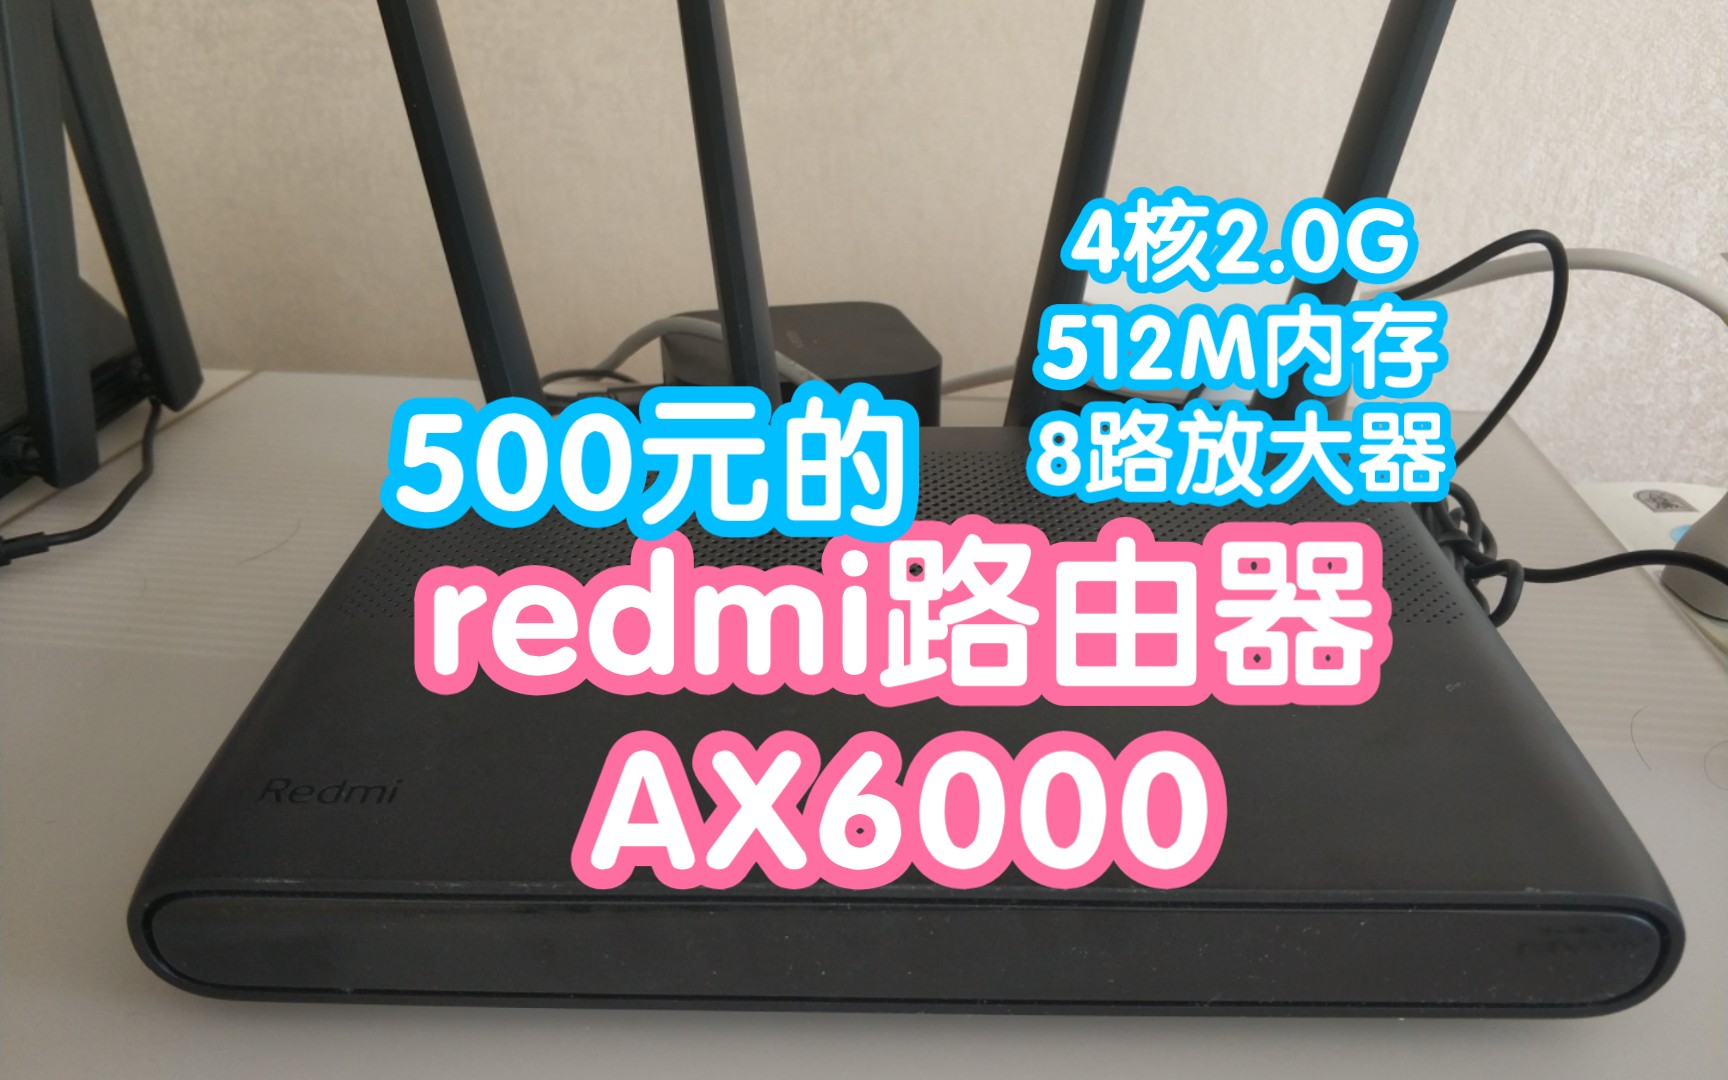 redmi路由器AX6000。500元档超值选择。MT7986A4核2.0G CPU，512M内存，160MHz频宽，8路独立信号放大器，米家一站式管理